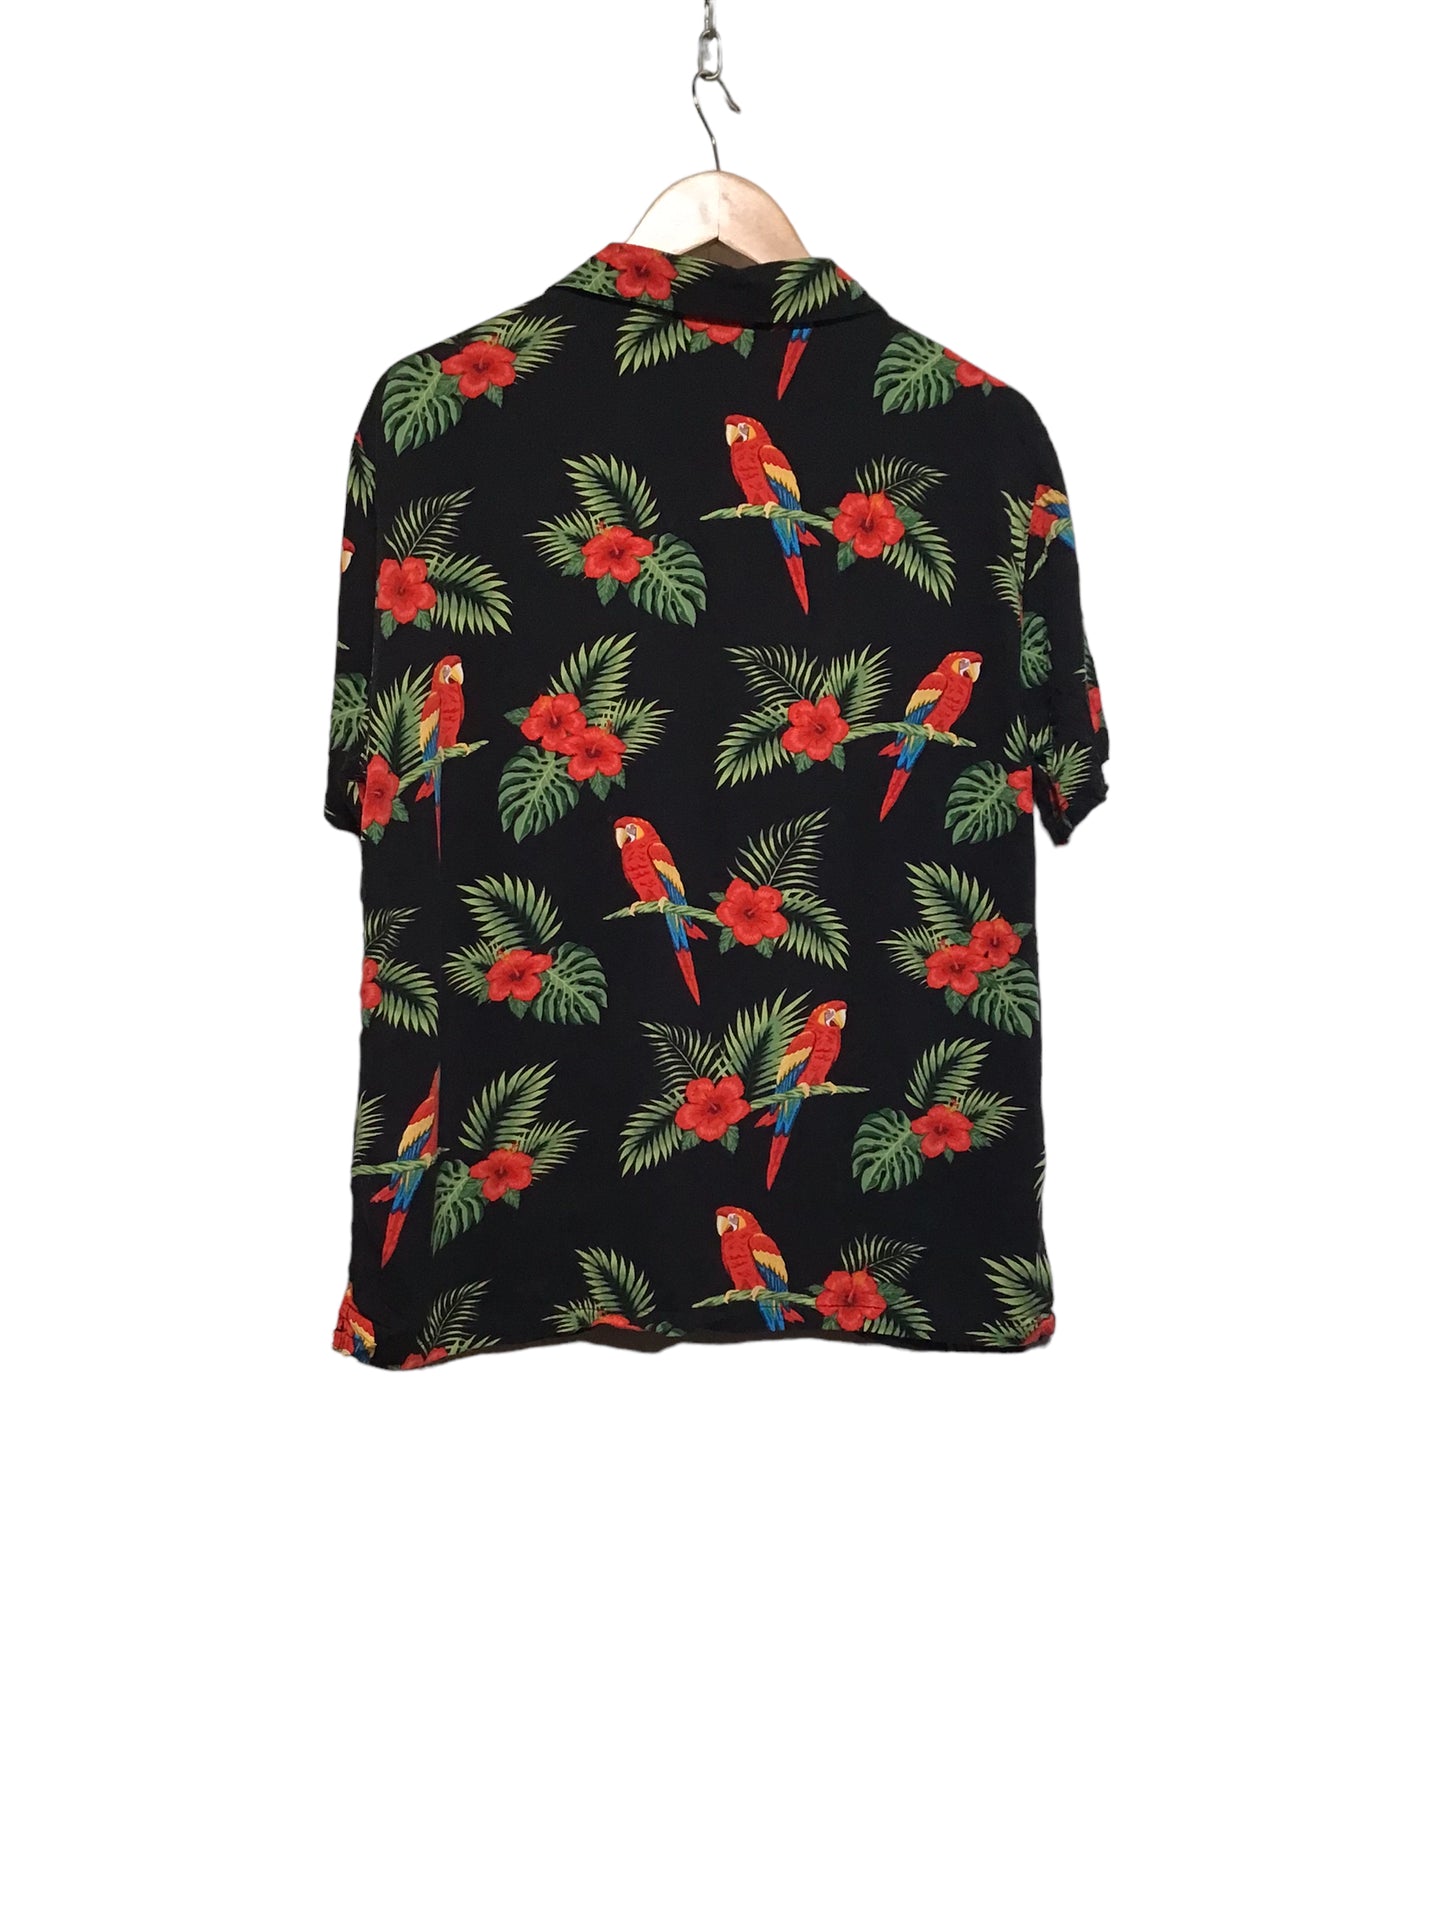 Parrot Hawaiian Shirt (Size S)